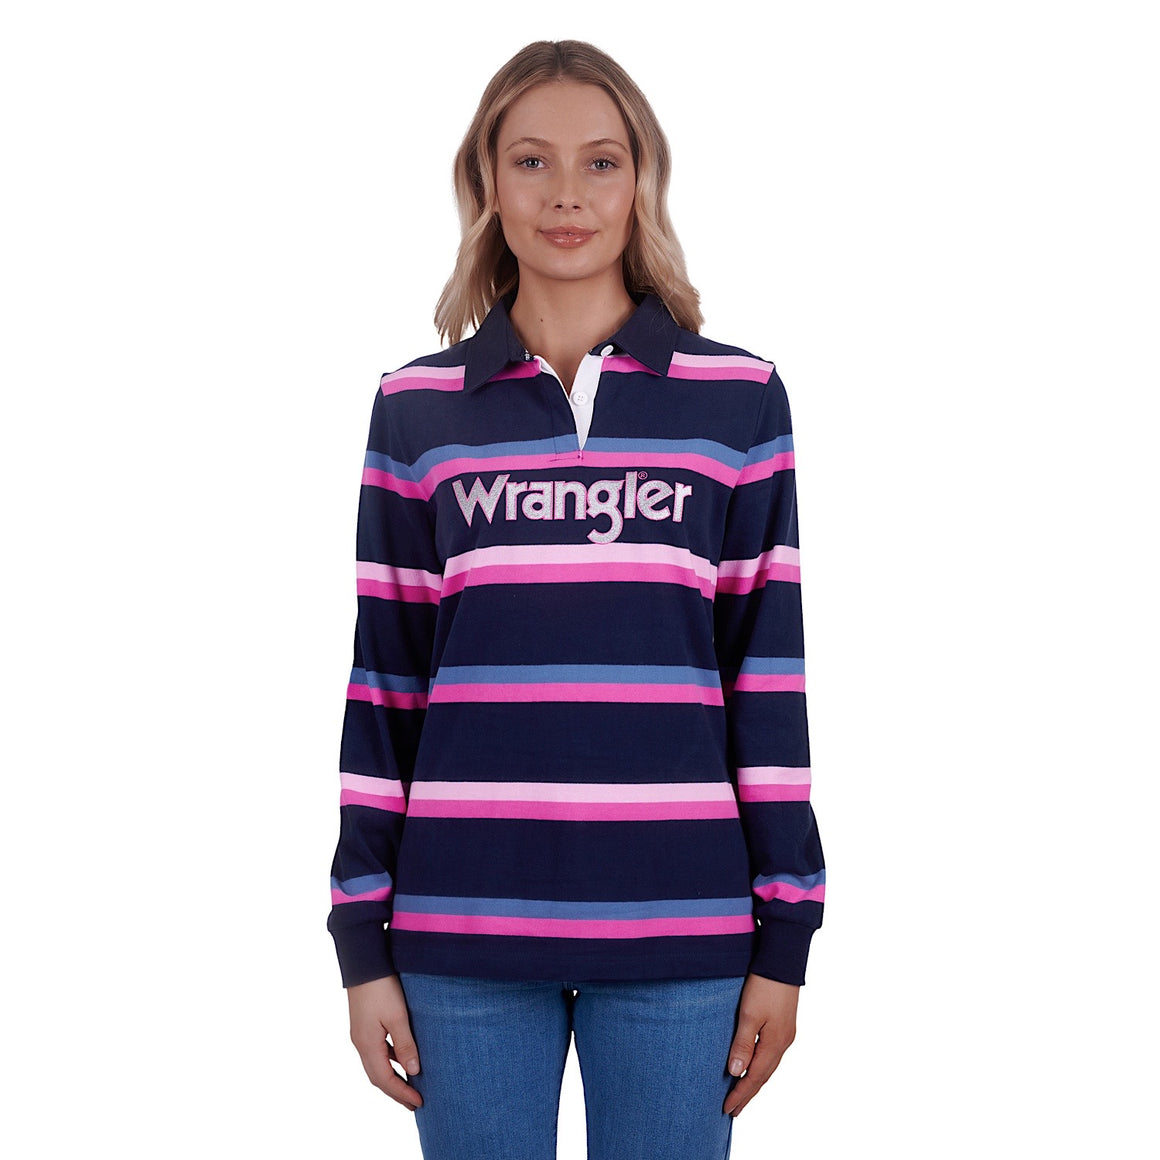 Wrangler Womens Jada Stripe Rugby Navy/Pink